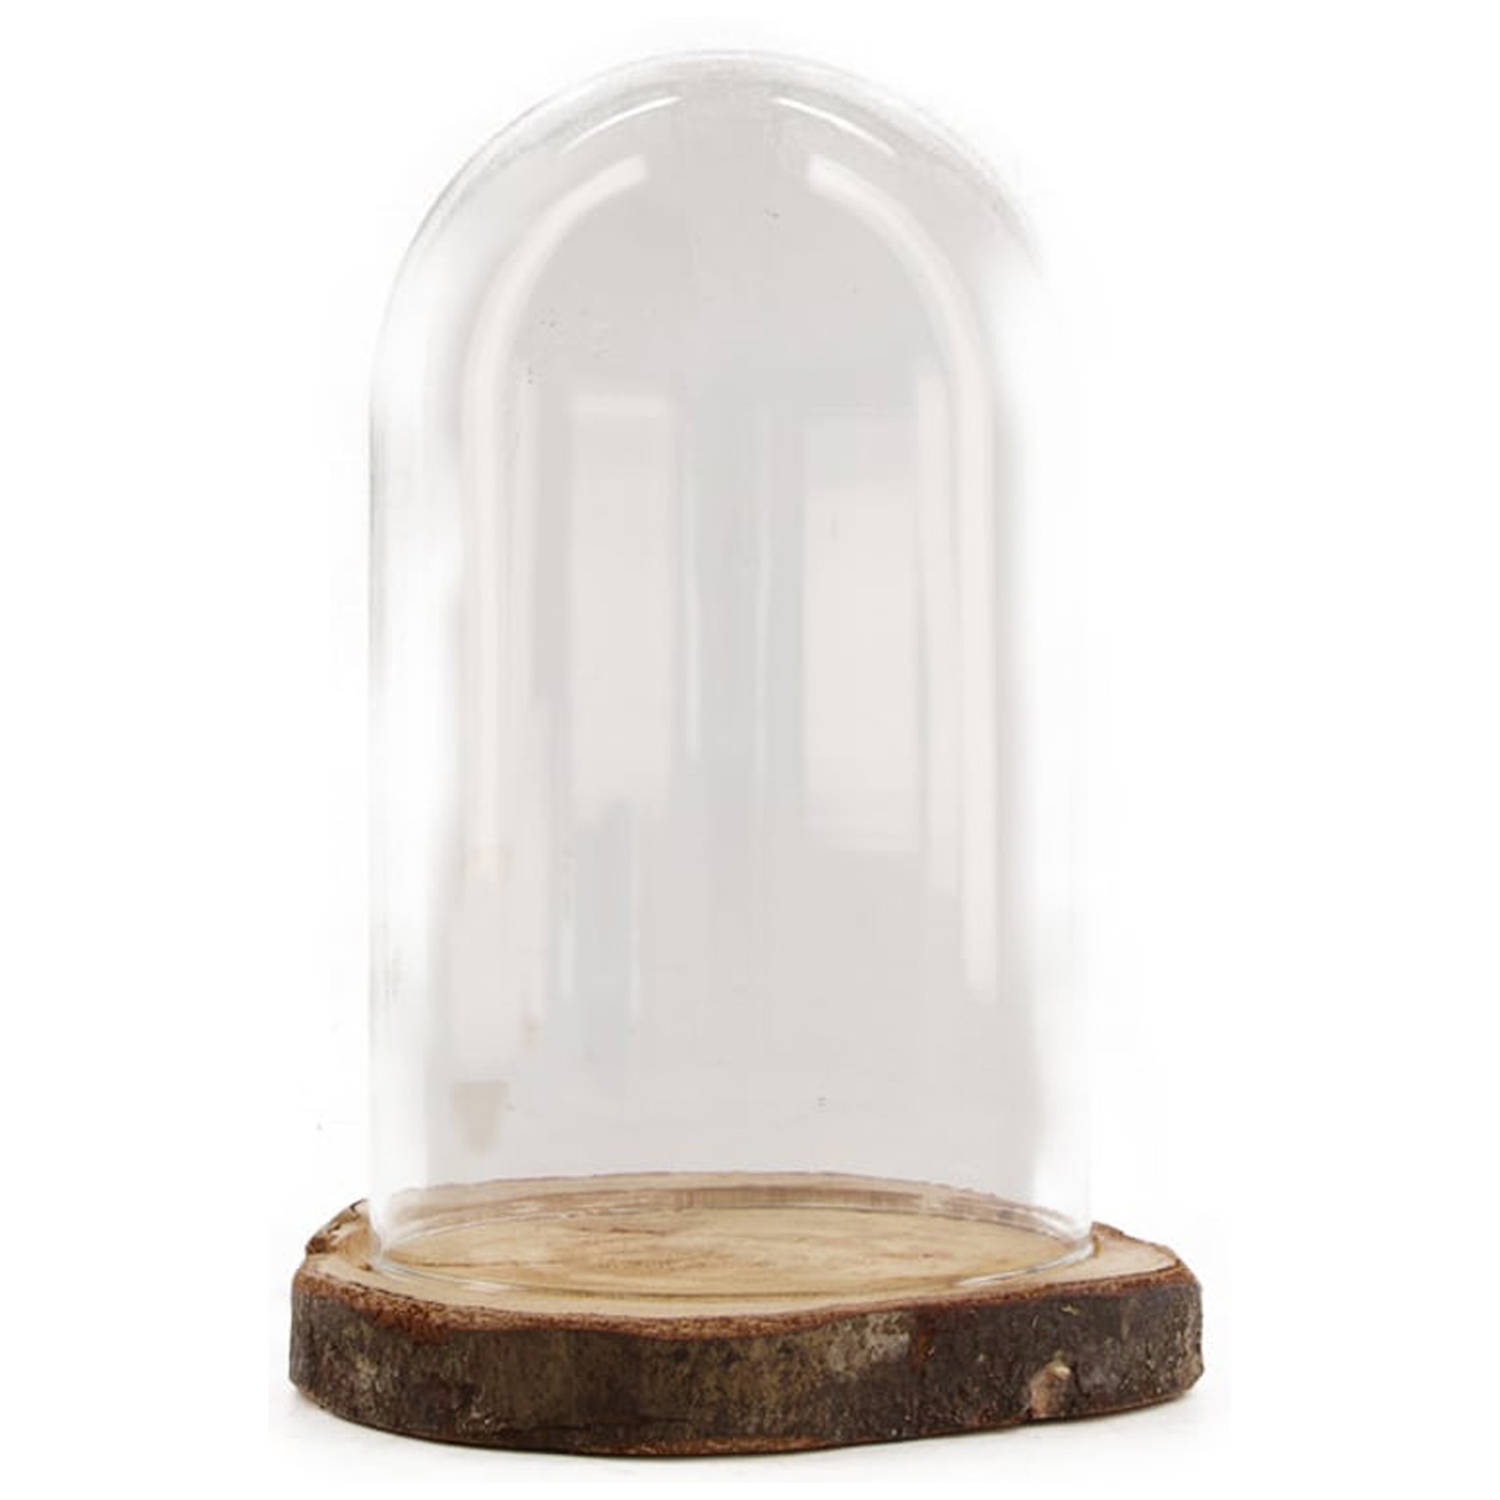 Dijk Natural Collections stolp - glas - houten bruin boomschijf plateau - D17 x H22 cm